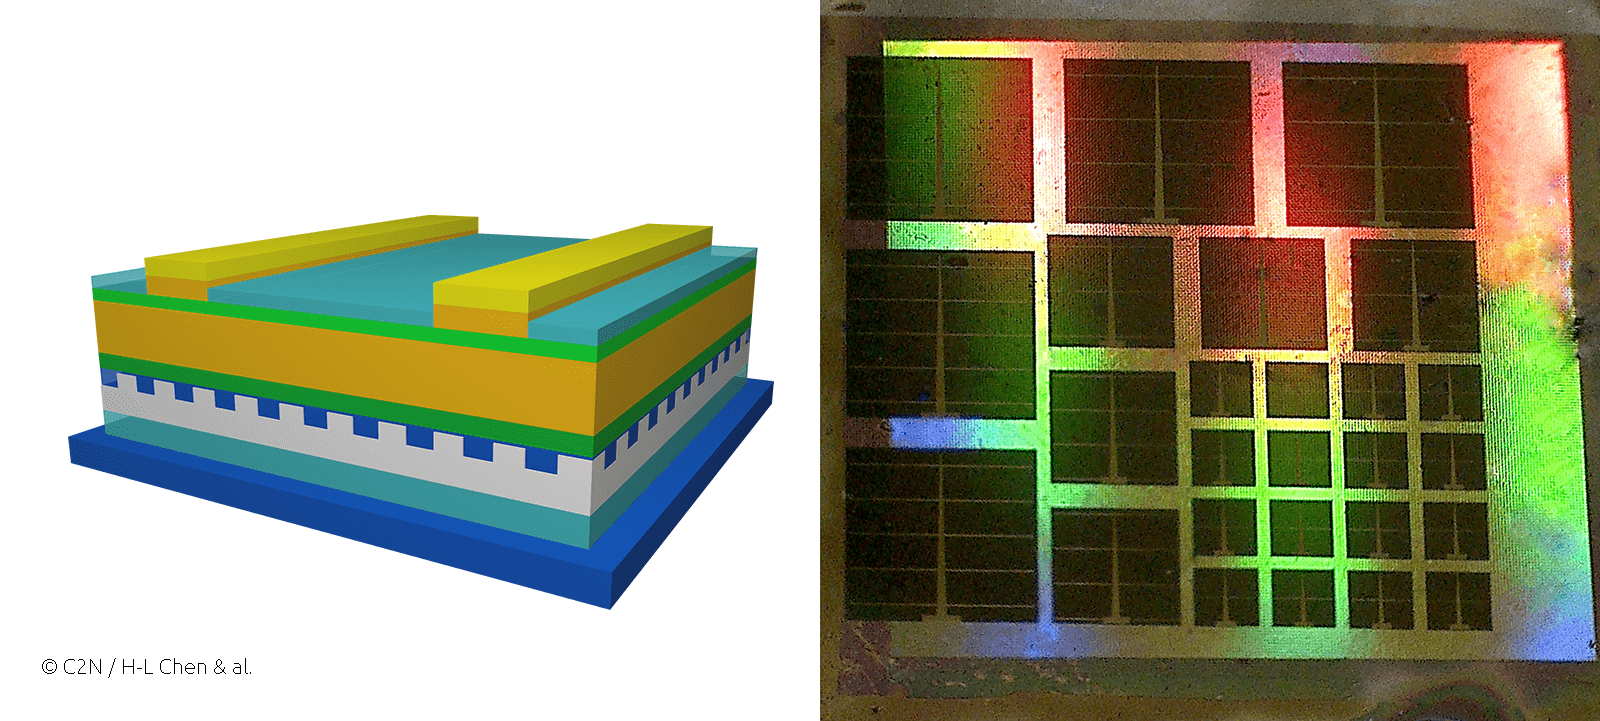 Ultrathin solar cell made of GaAs